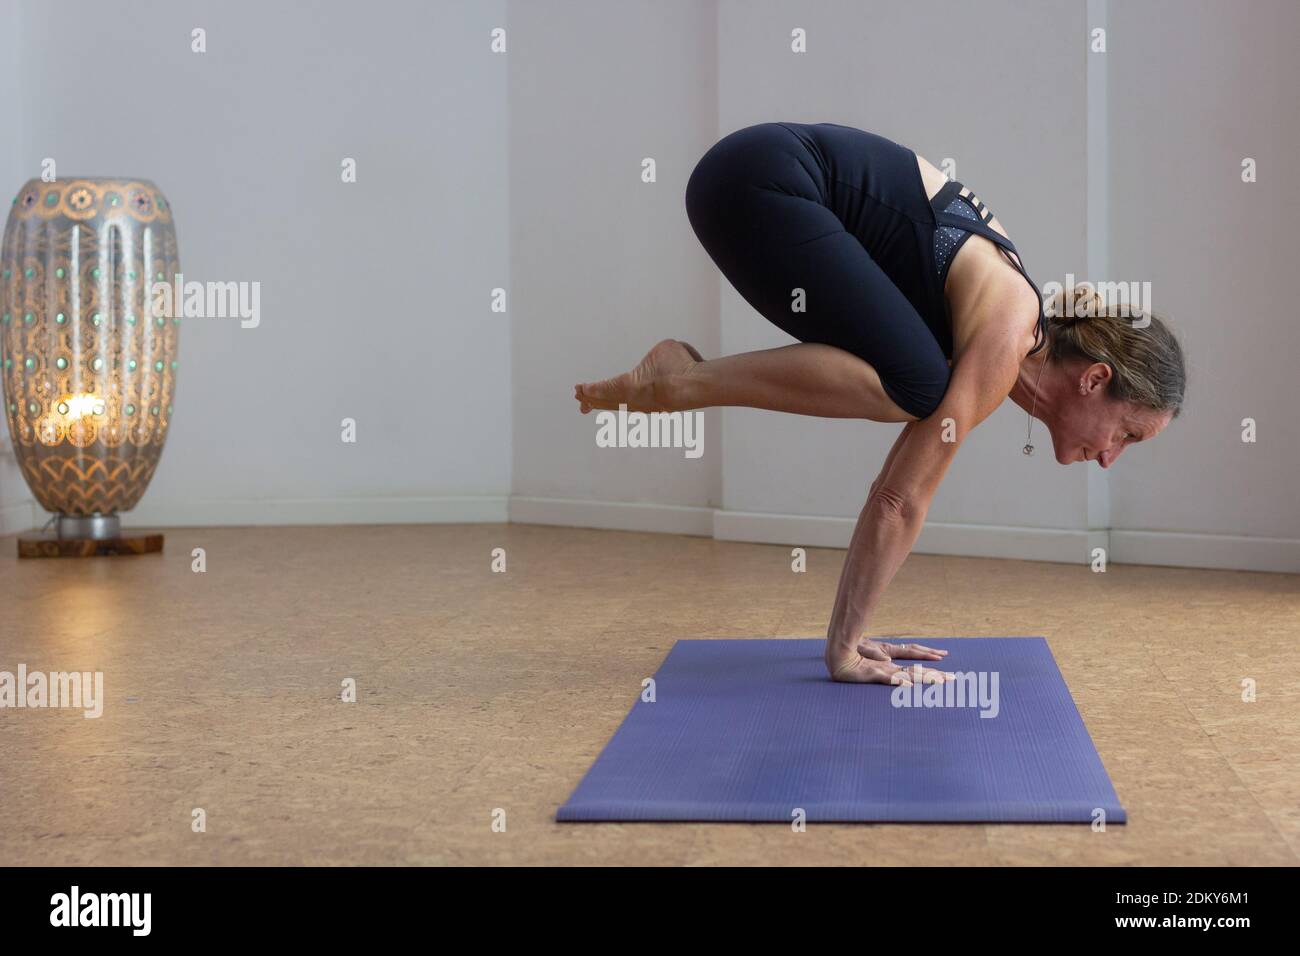 Standing Yoga Poses Dimensions & Drawings | Dimensions.com